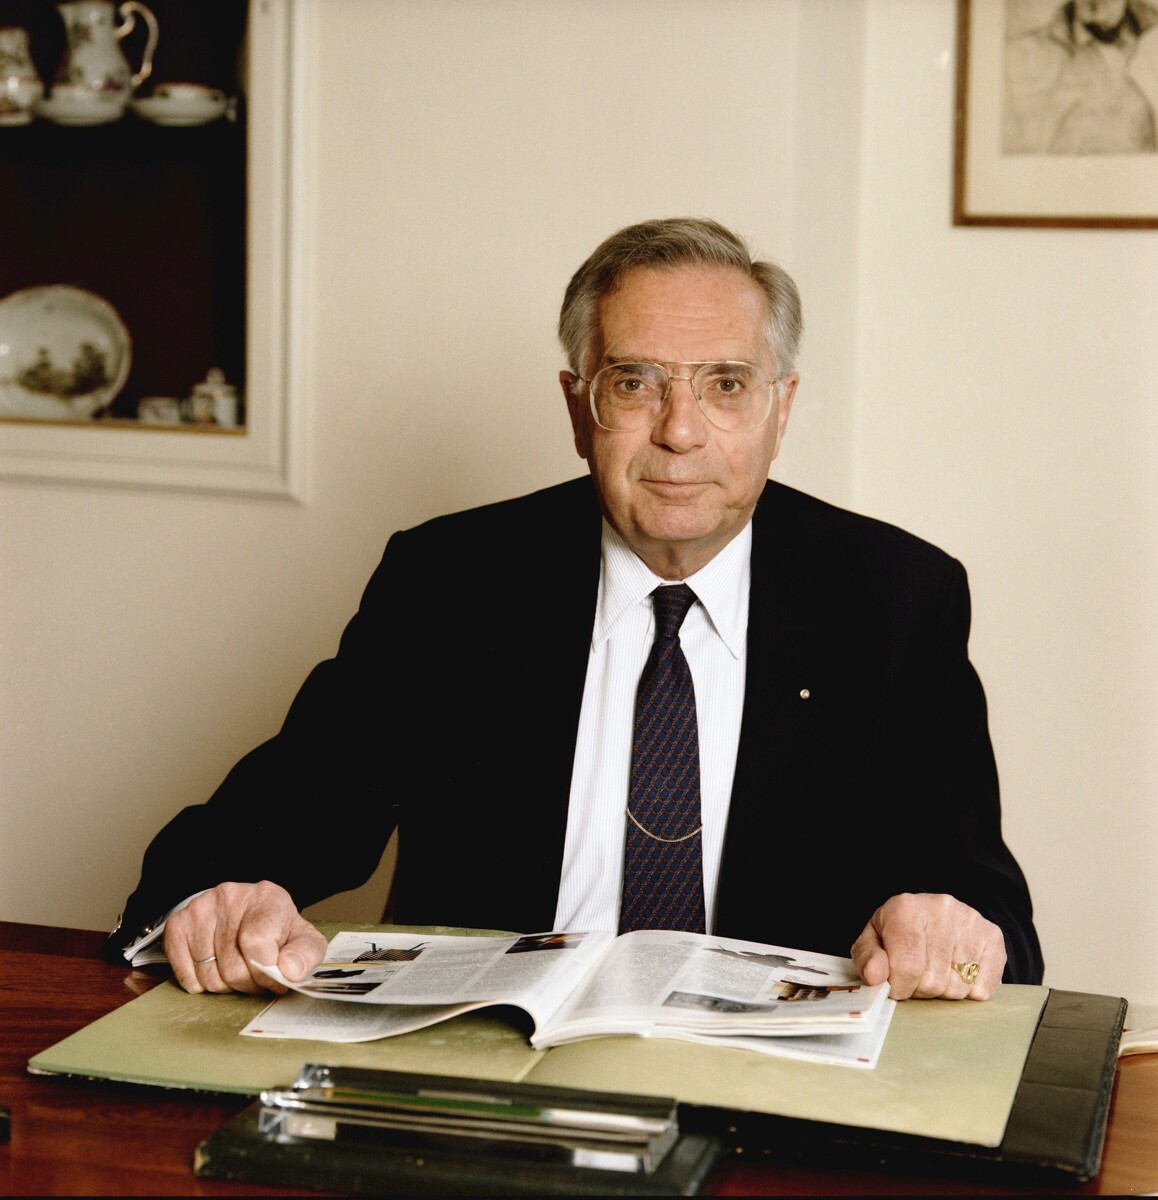 Dr. Wolfgang Kühborth